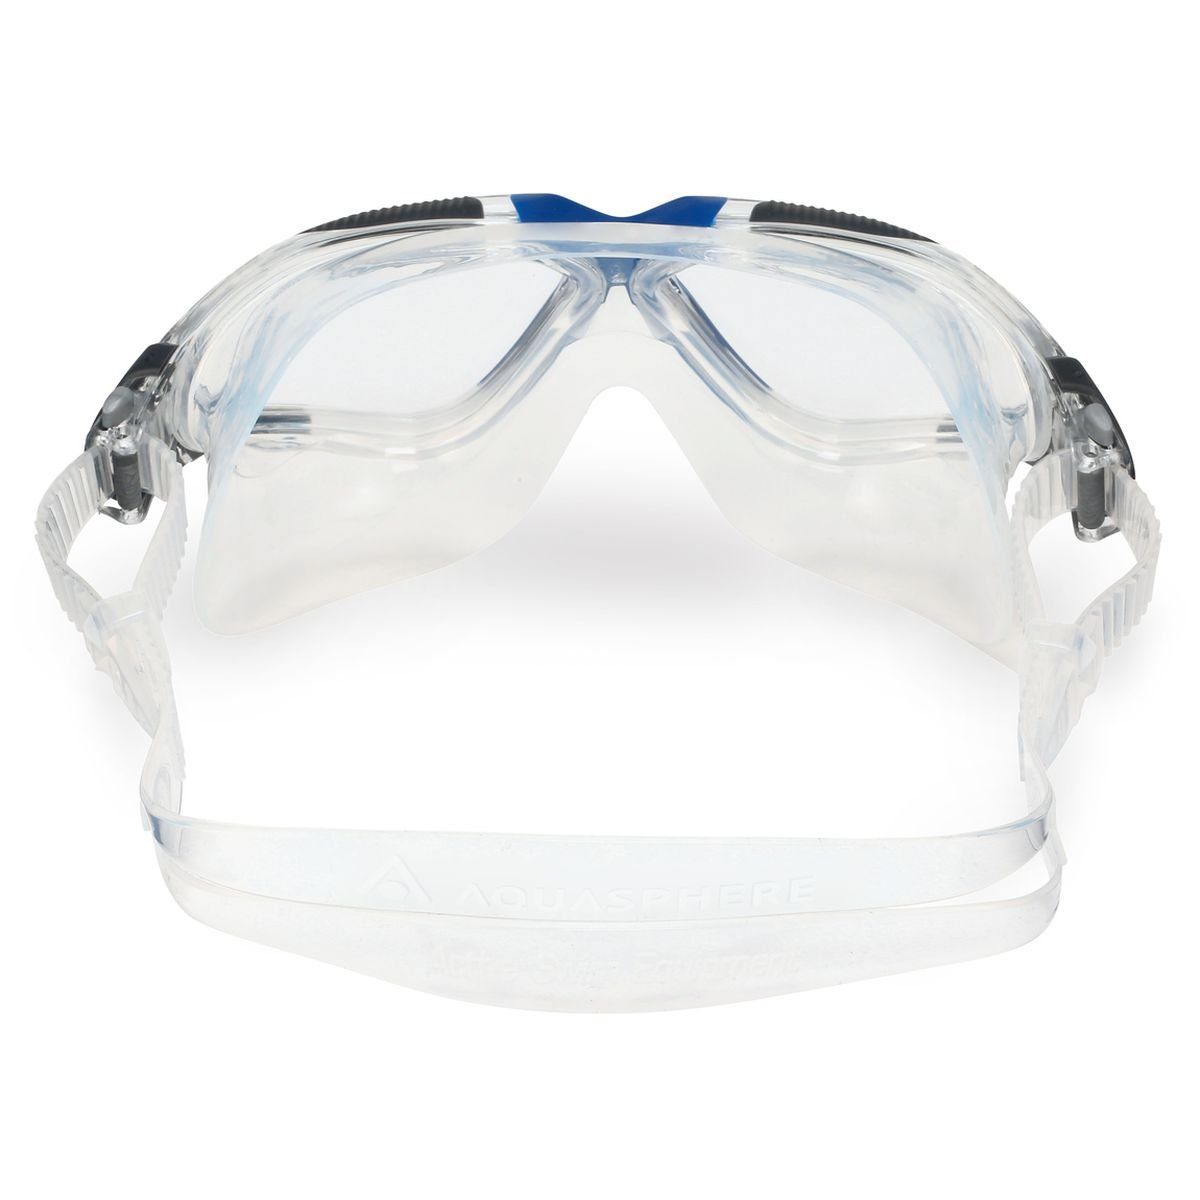 Aquasphere Schwimmbrille transparent/blau Vista Schwimmaske